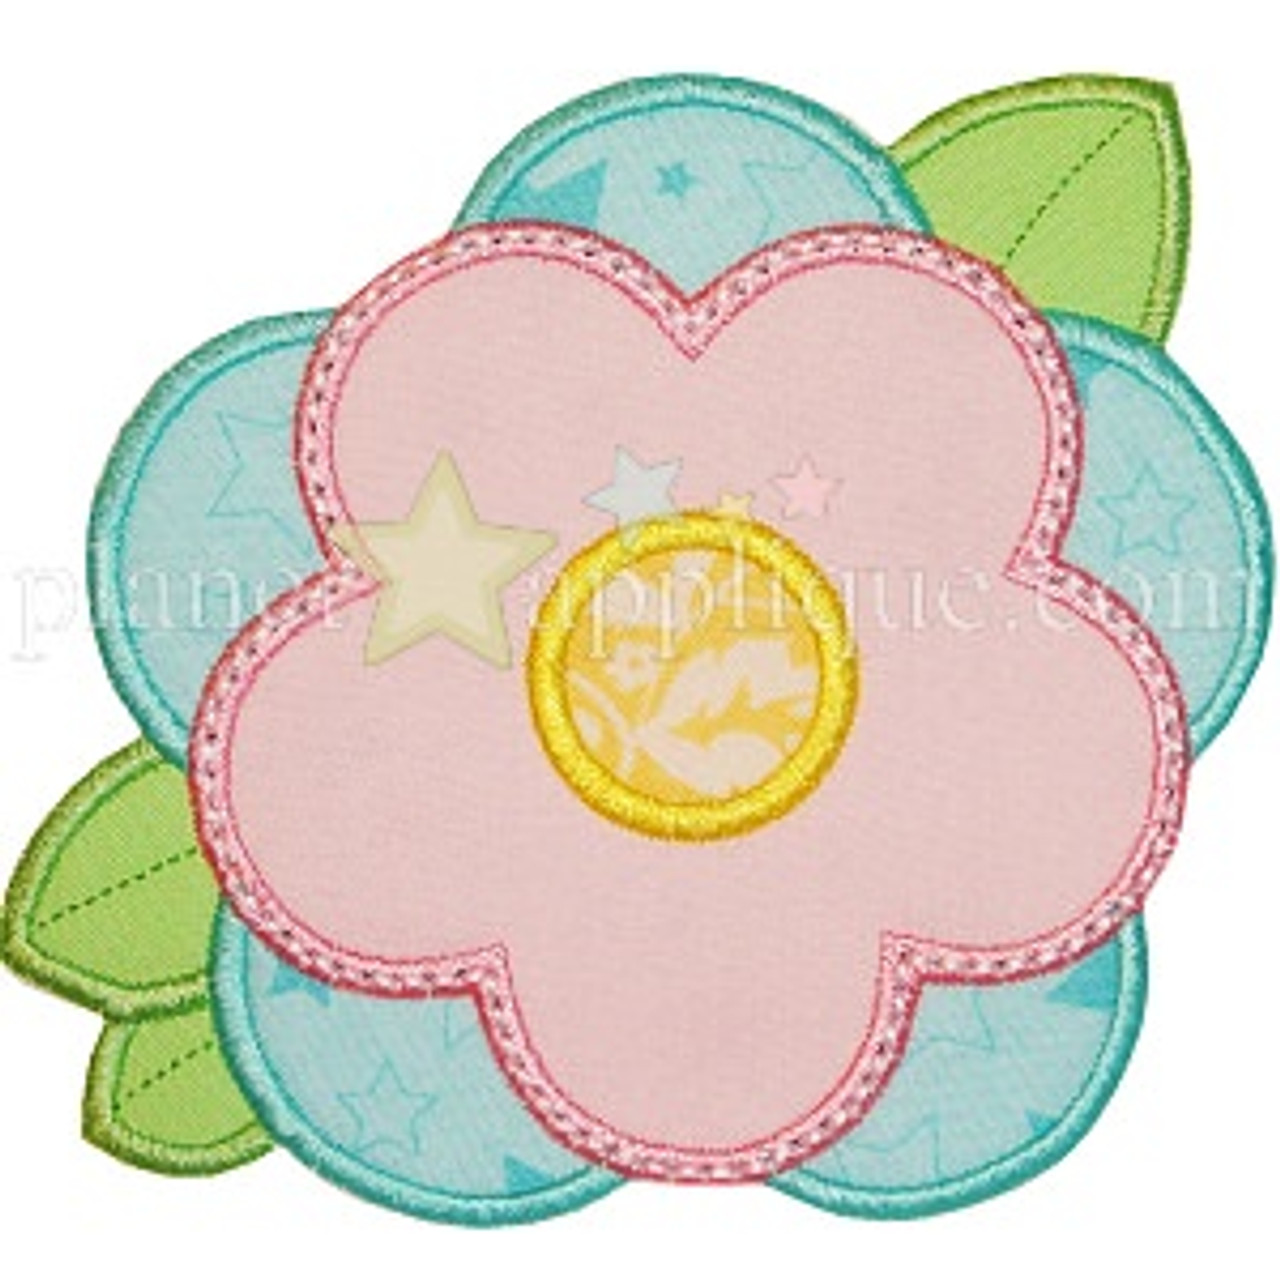 Embroidered Spring Flower Applique